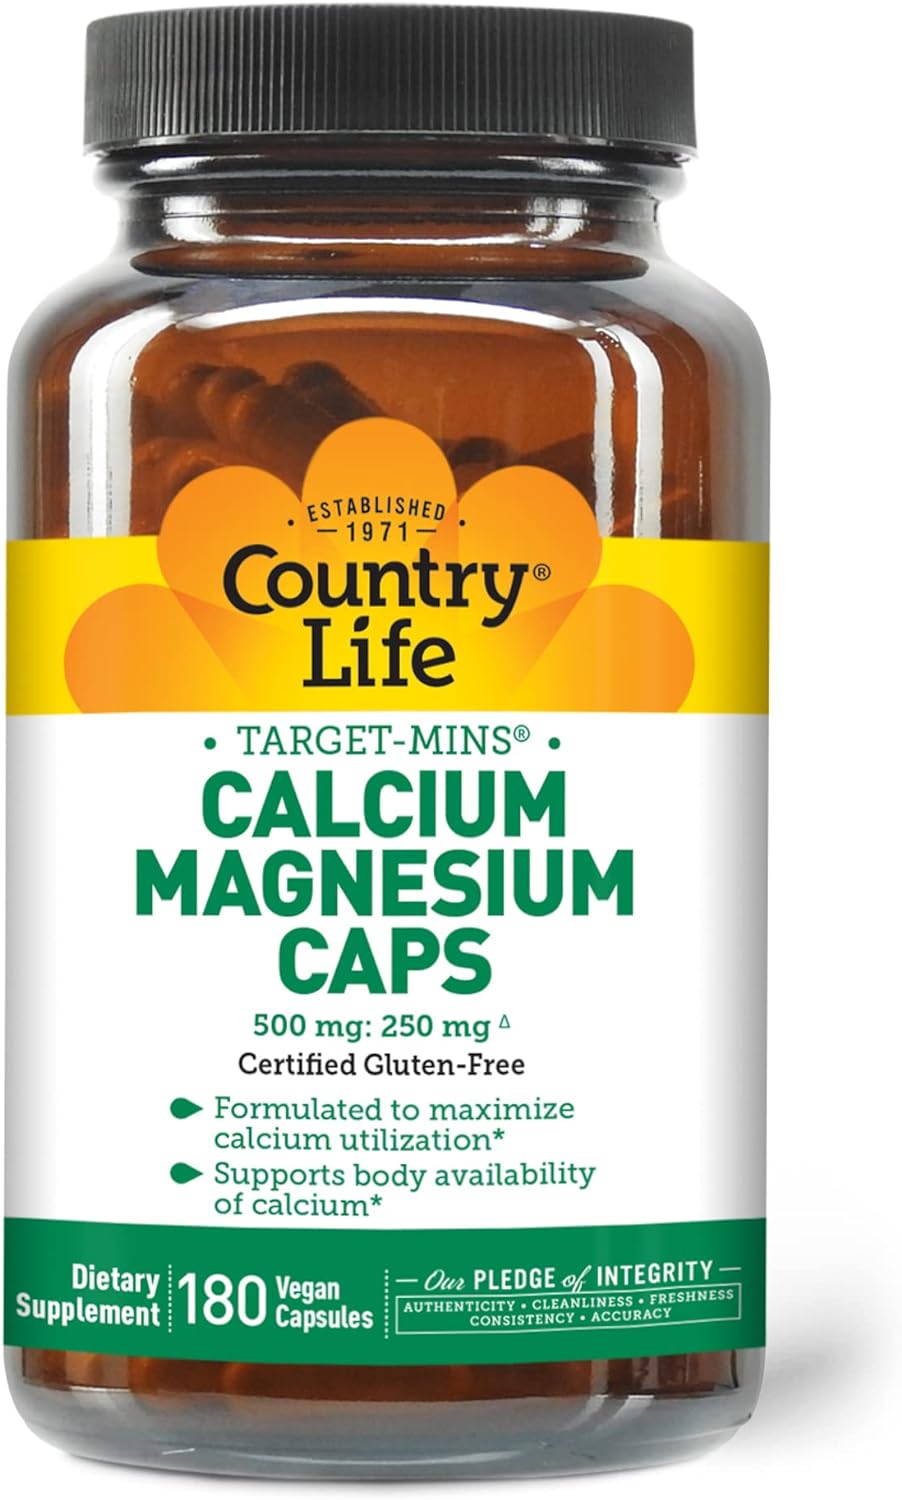 Country Life Target-Mins Calcium Magnesium Caps, 500mg: 250mg, 180 Veg